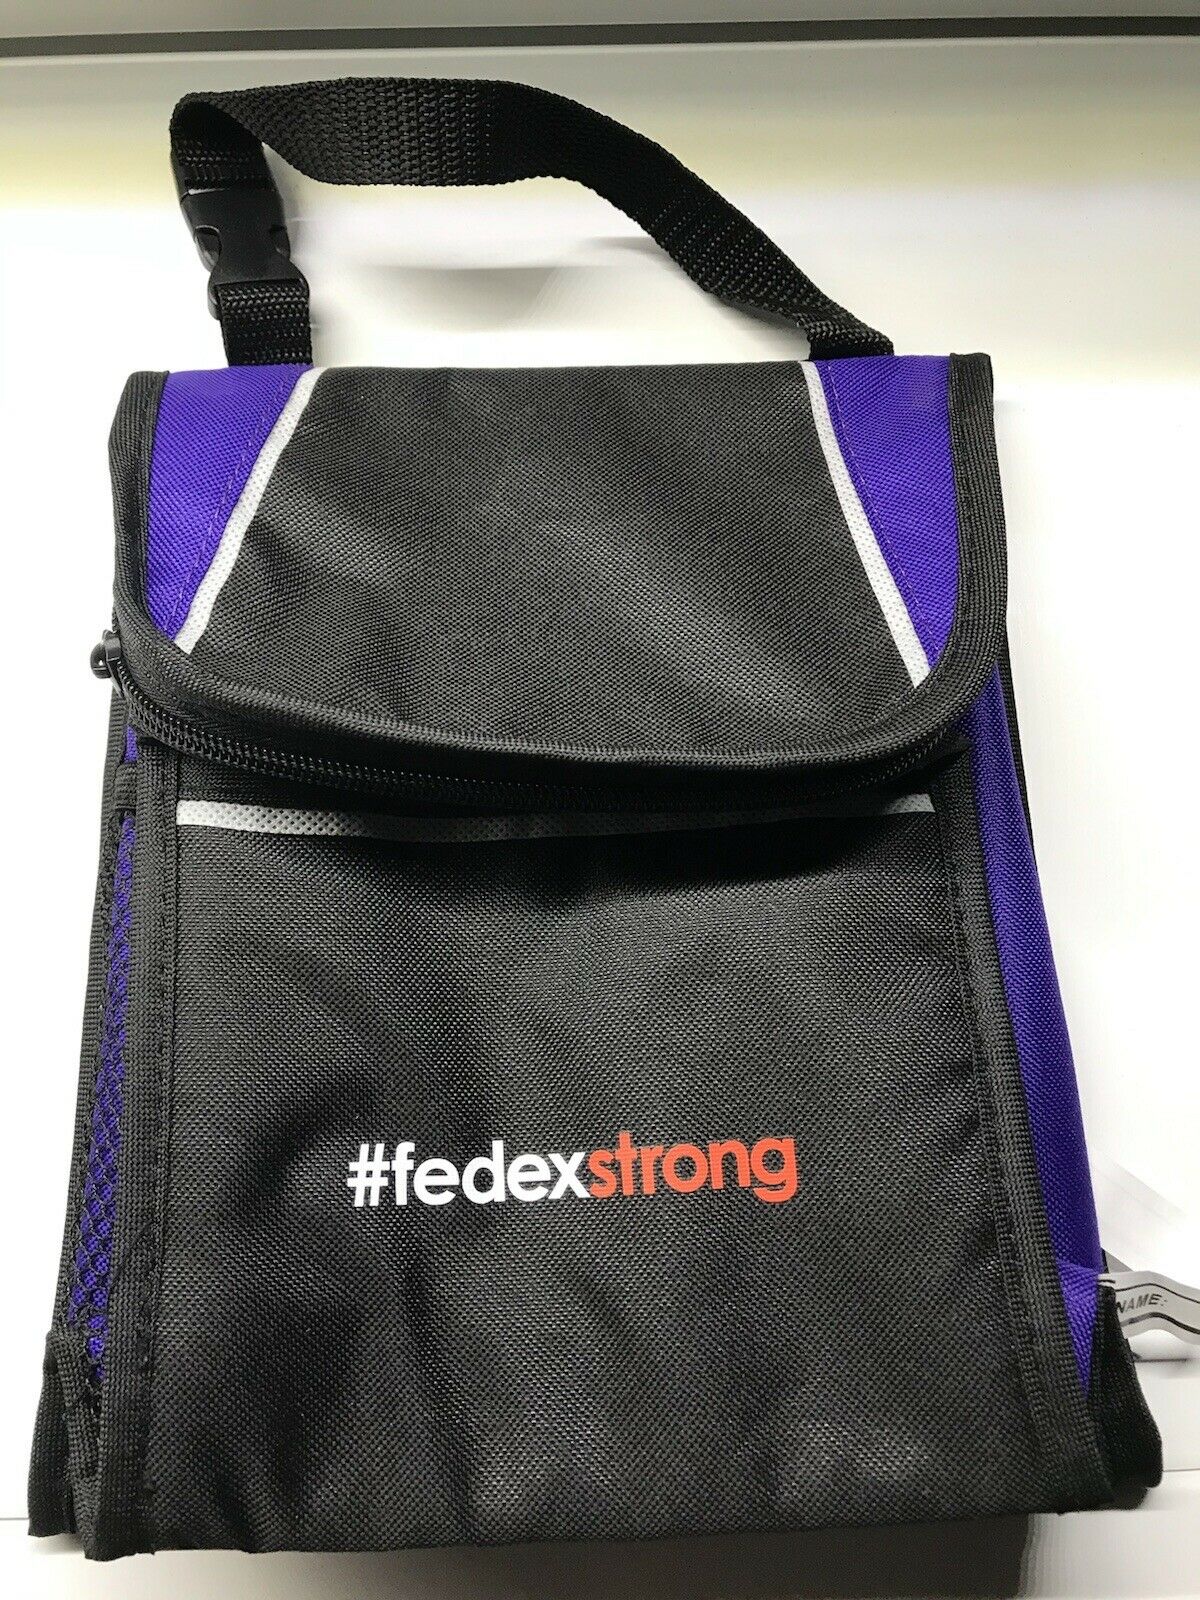 FedEx Lunch Bag, FedEx Strong  Lunch Bag Brand New!